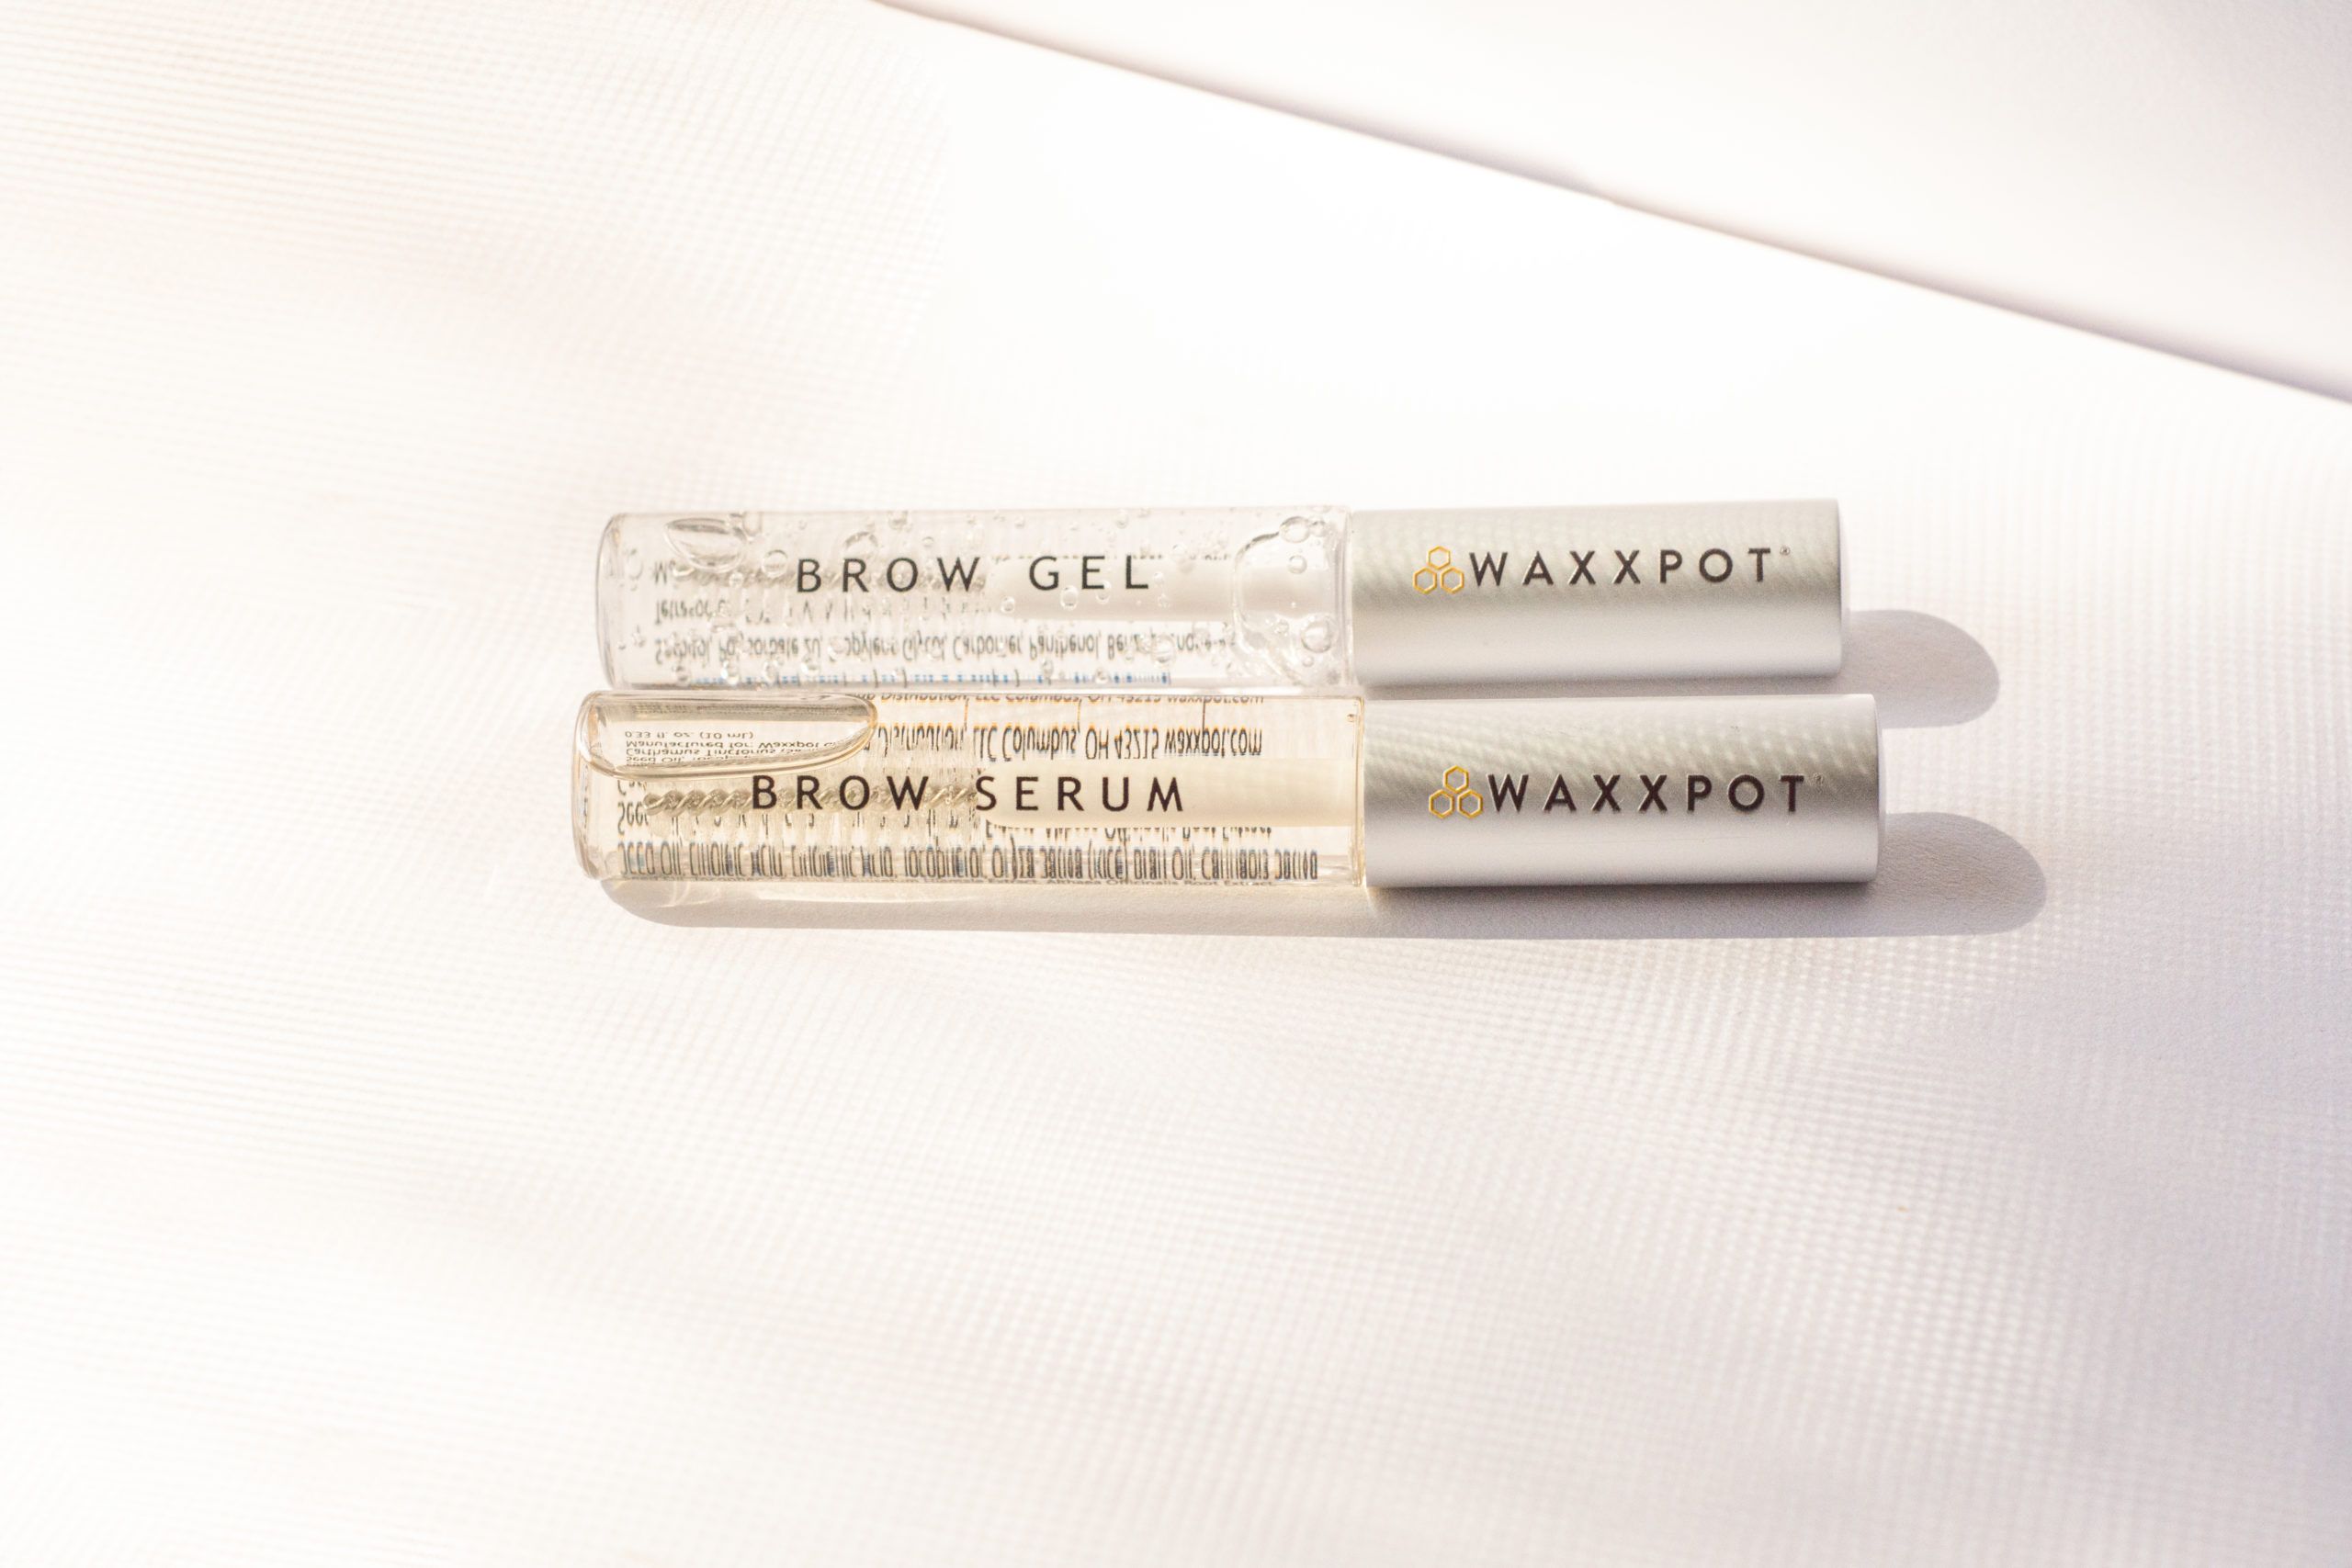 Waxxpot Brow Gel and Brow Serum